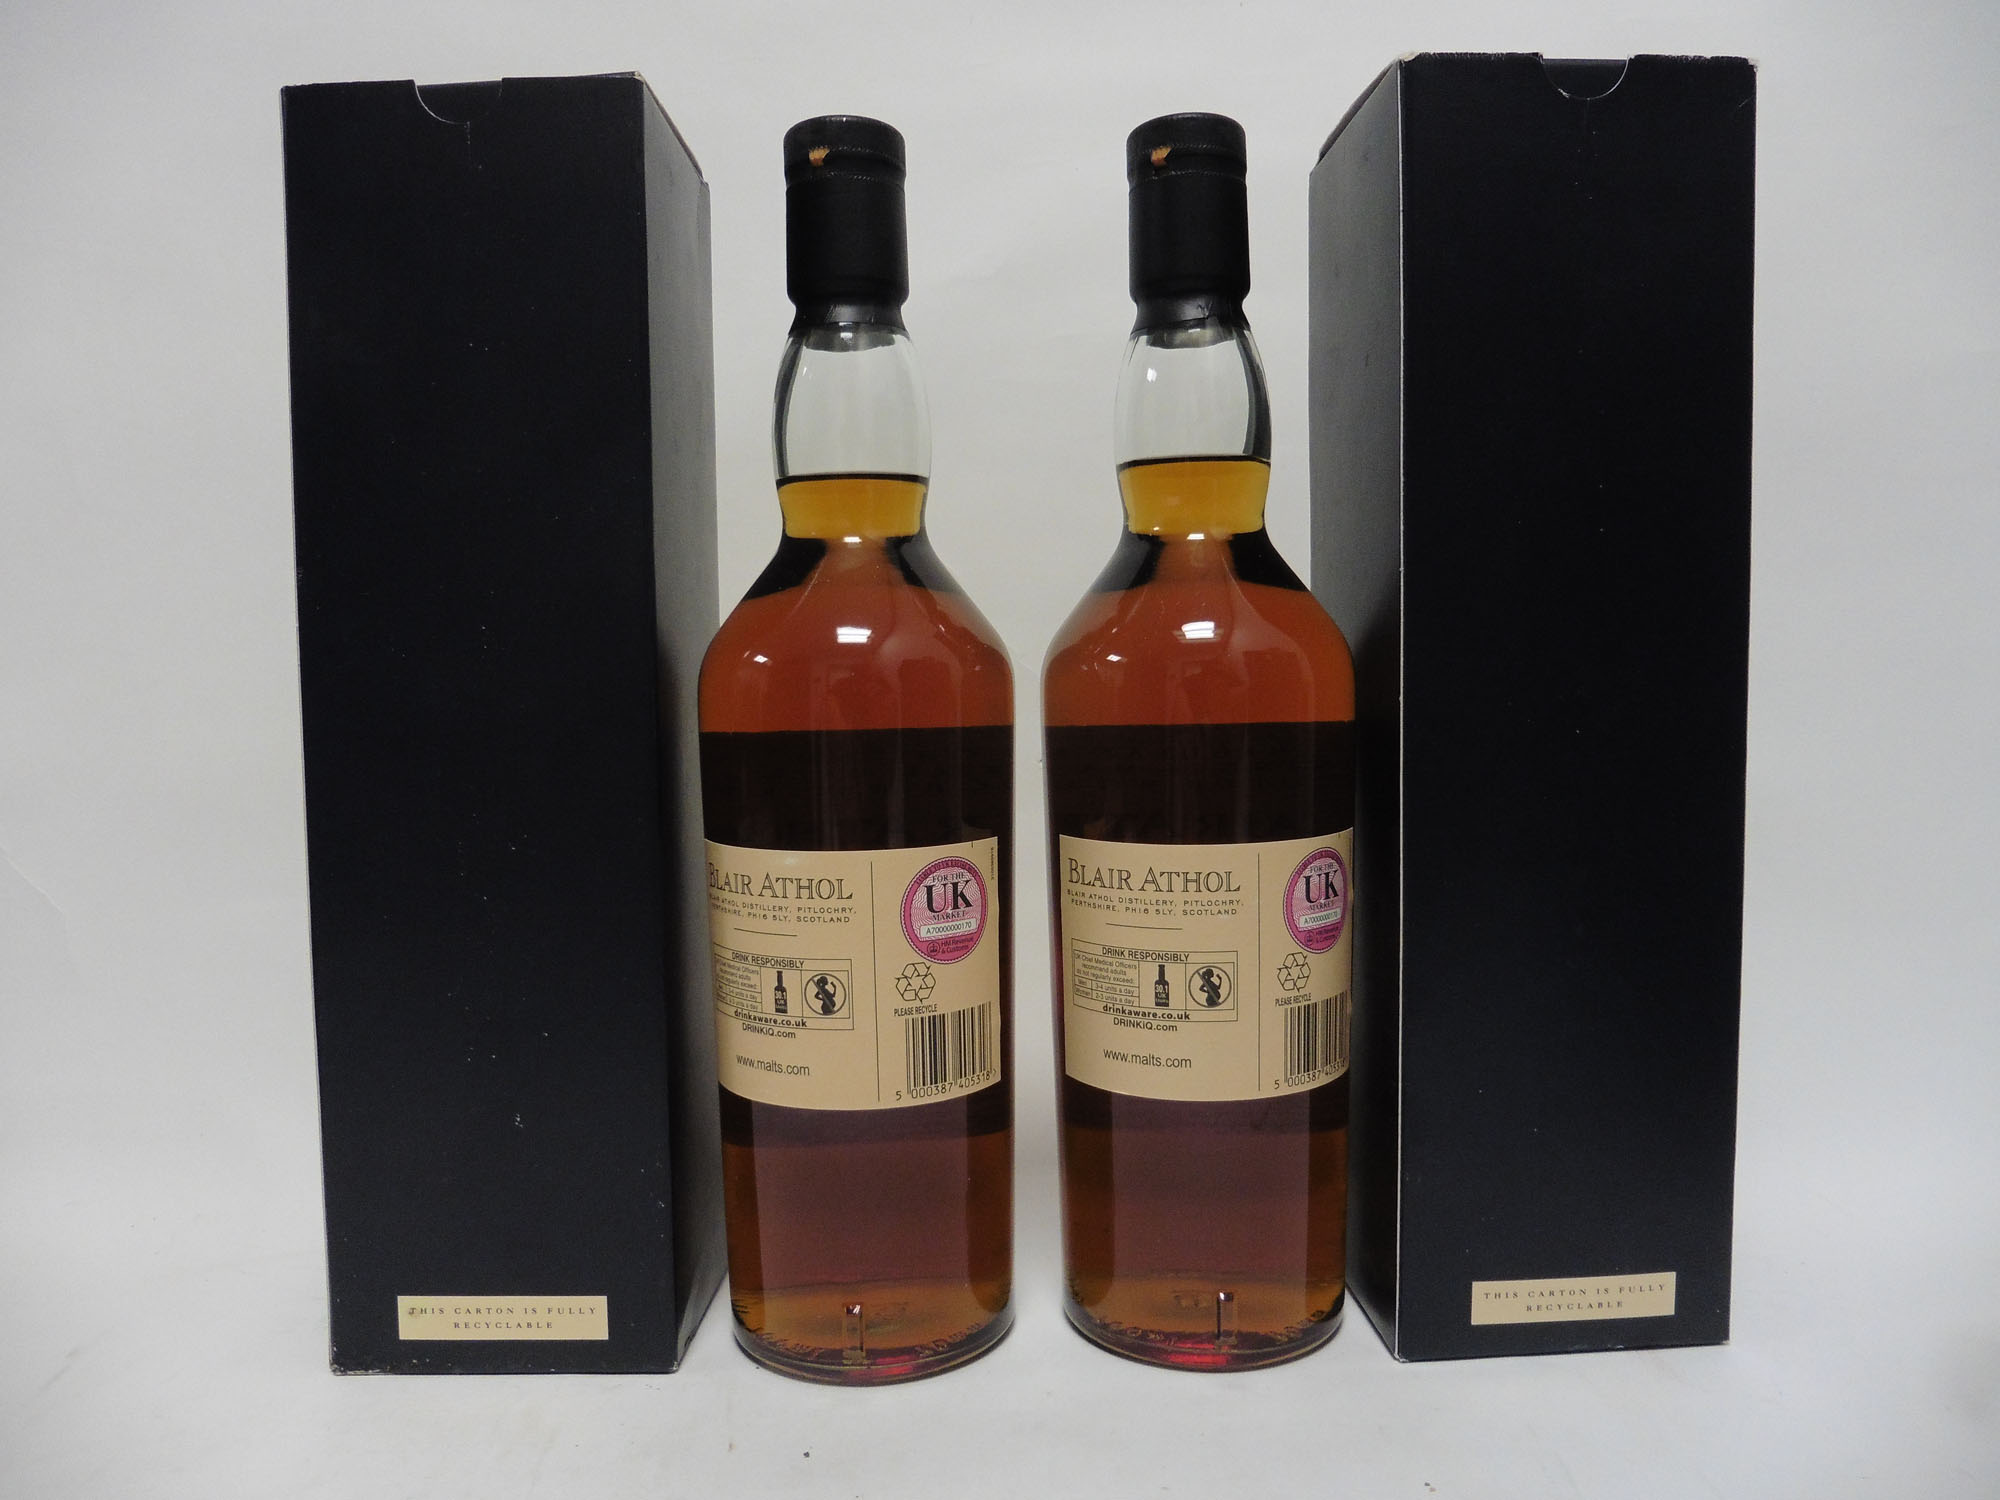 2 bottles of Blair Athol 12 year old Highland Single Malt Scotch Whisky with boxes, - Image 2 of 2